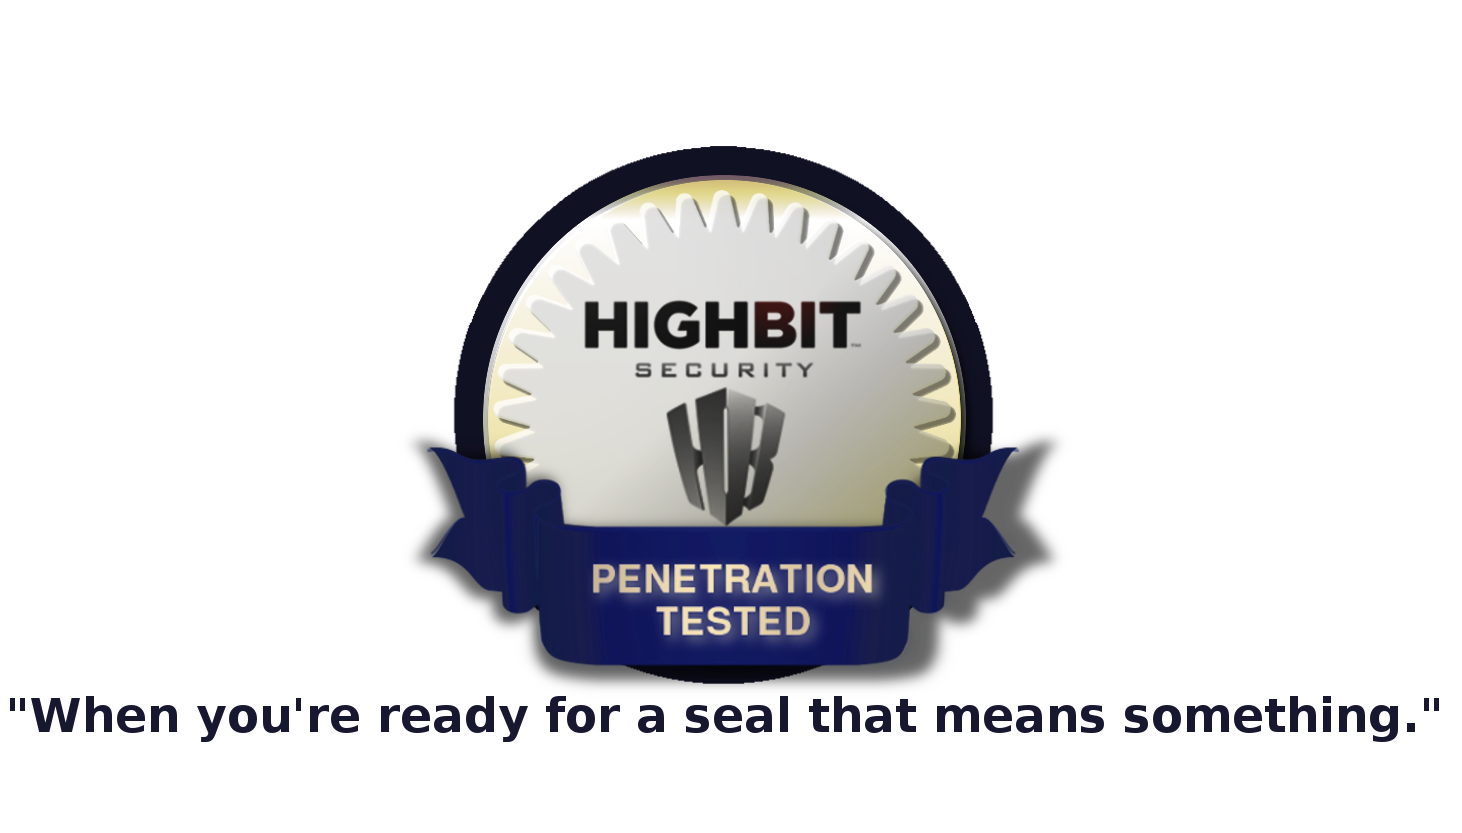 Penetration testing validation seal